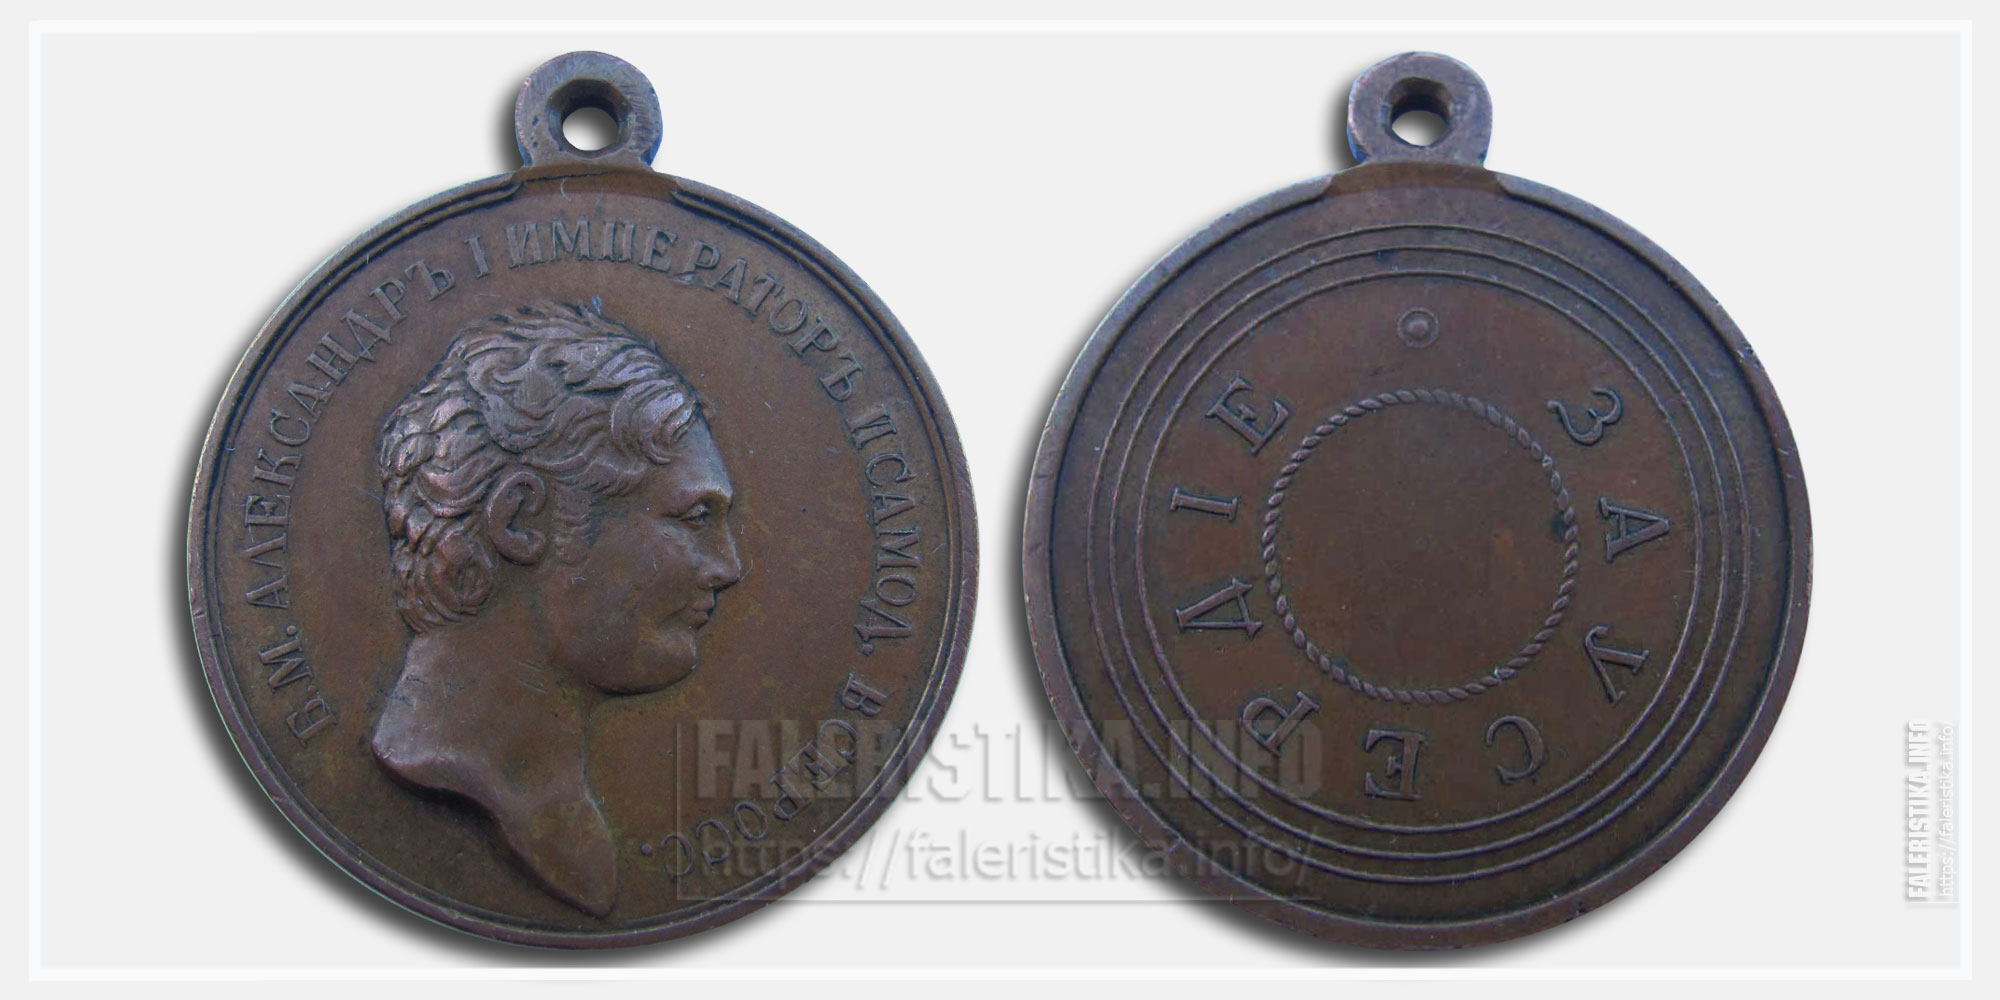 Медаль "За усердие" Александр I (Фантазия)